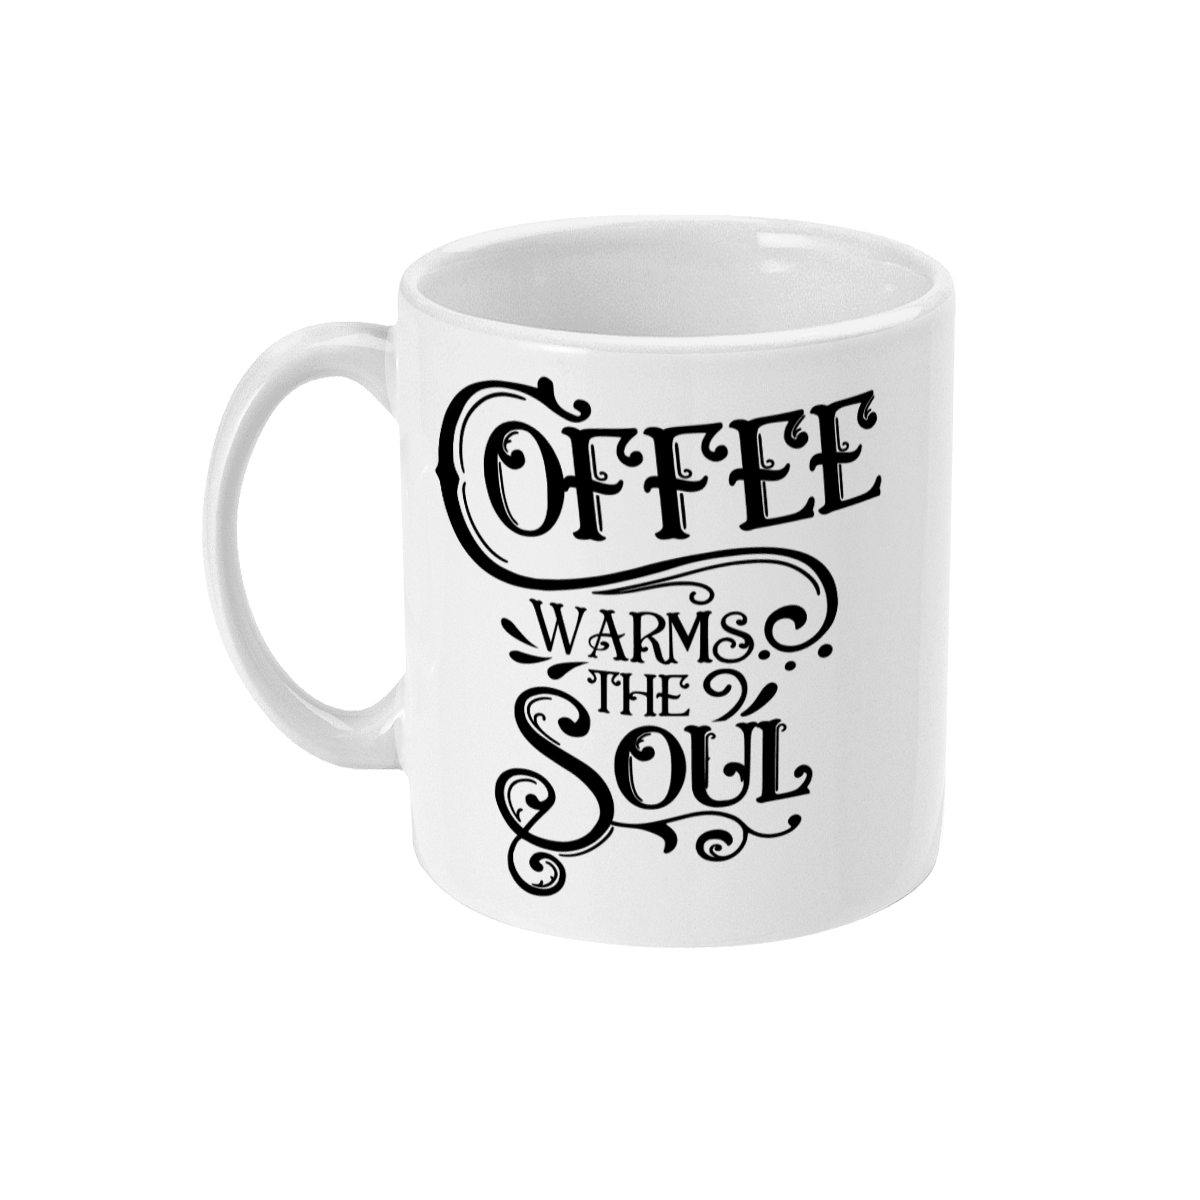 Red Berry Crafts Ltd:Coffee Warms the Soul 11oz Ceramic Mug